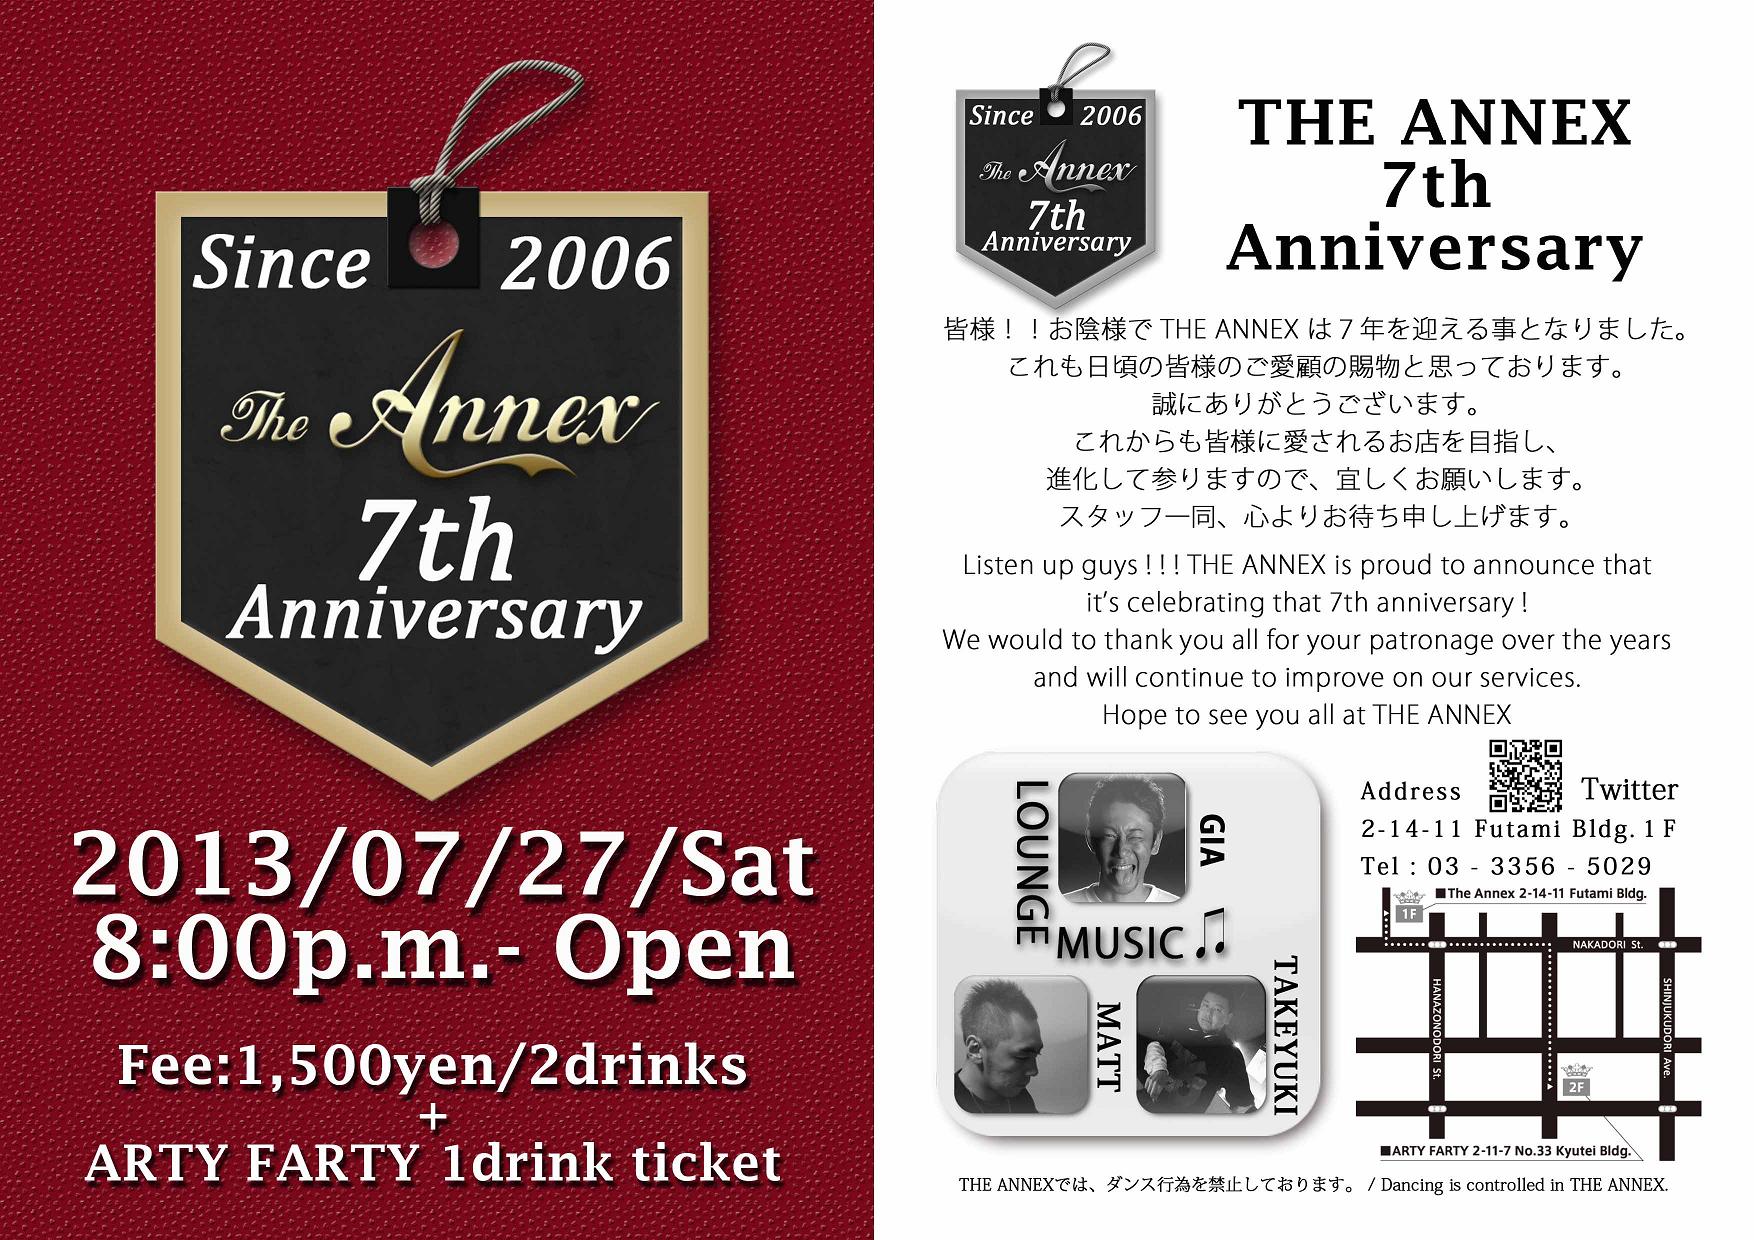 THE ANNEX 7th Anniversary  - 1754x1240 422.9kb